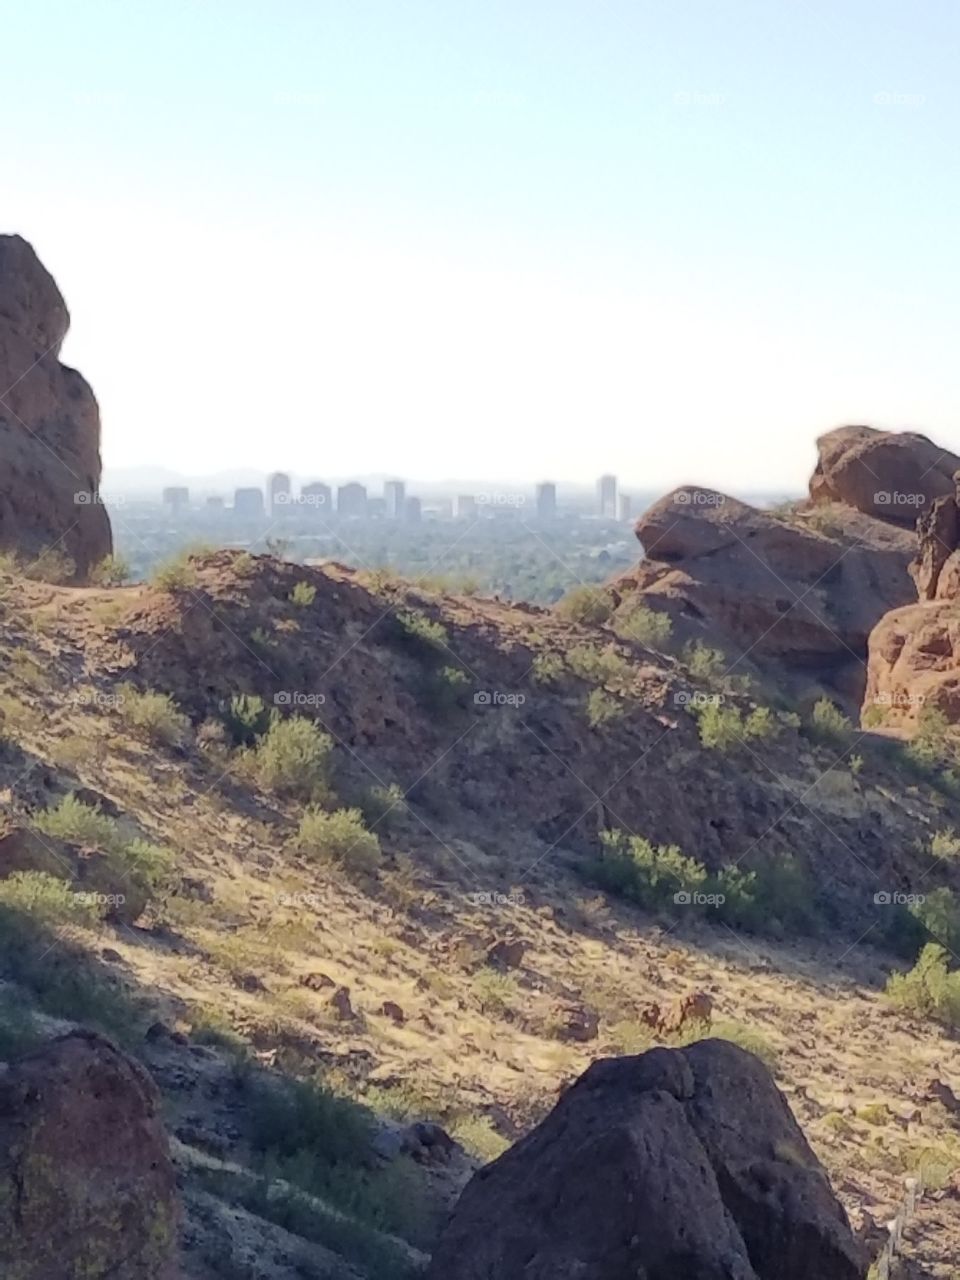 Phoenix beyond the rocks